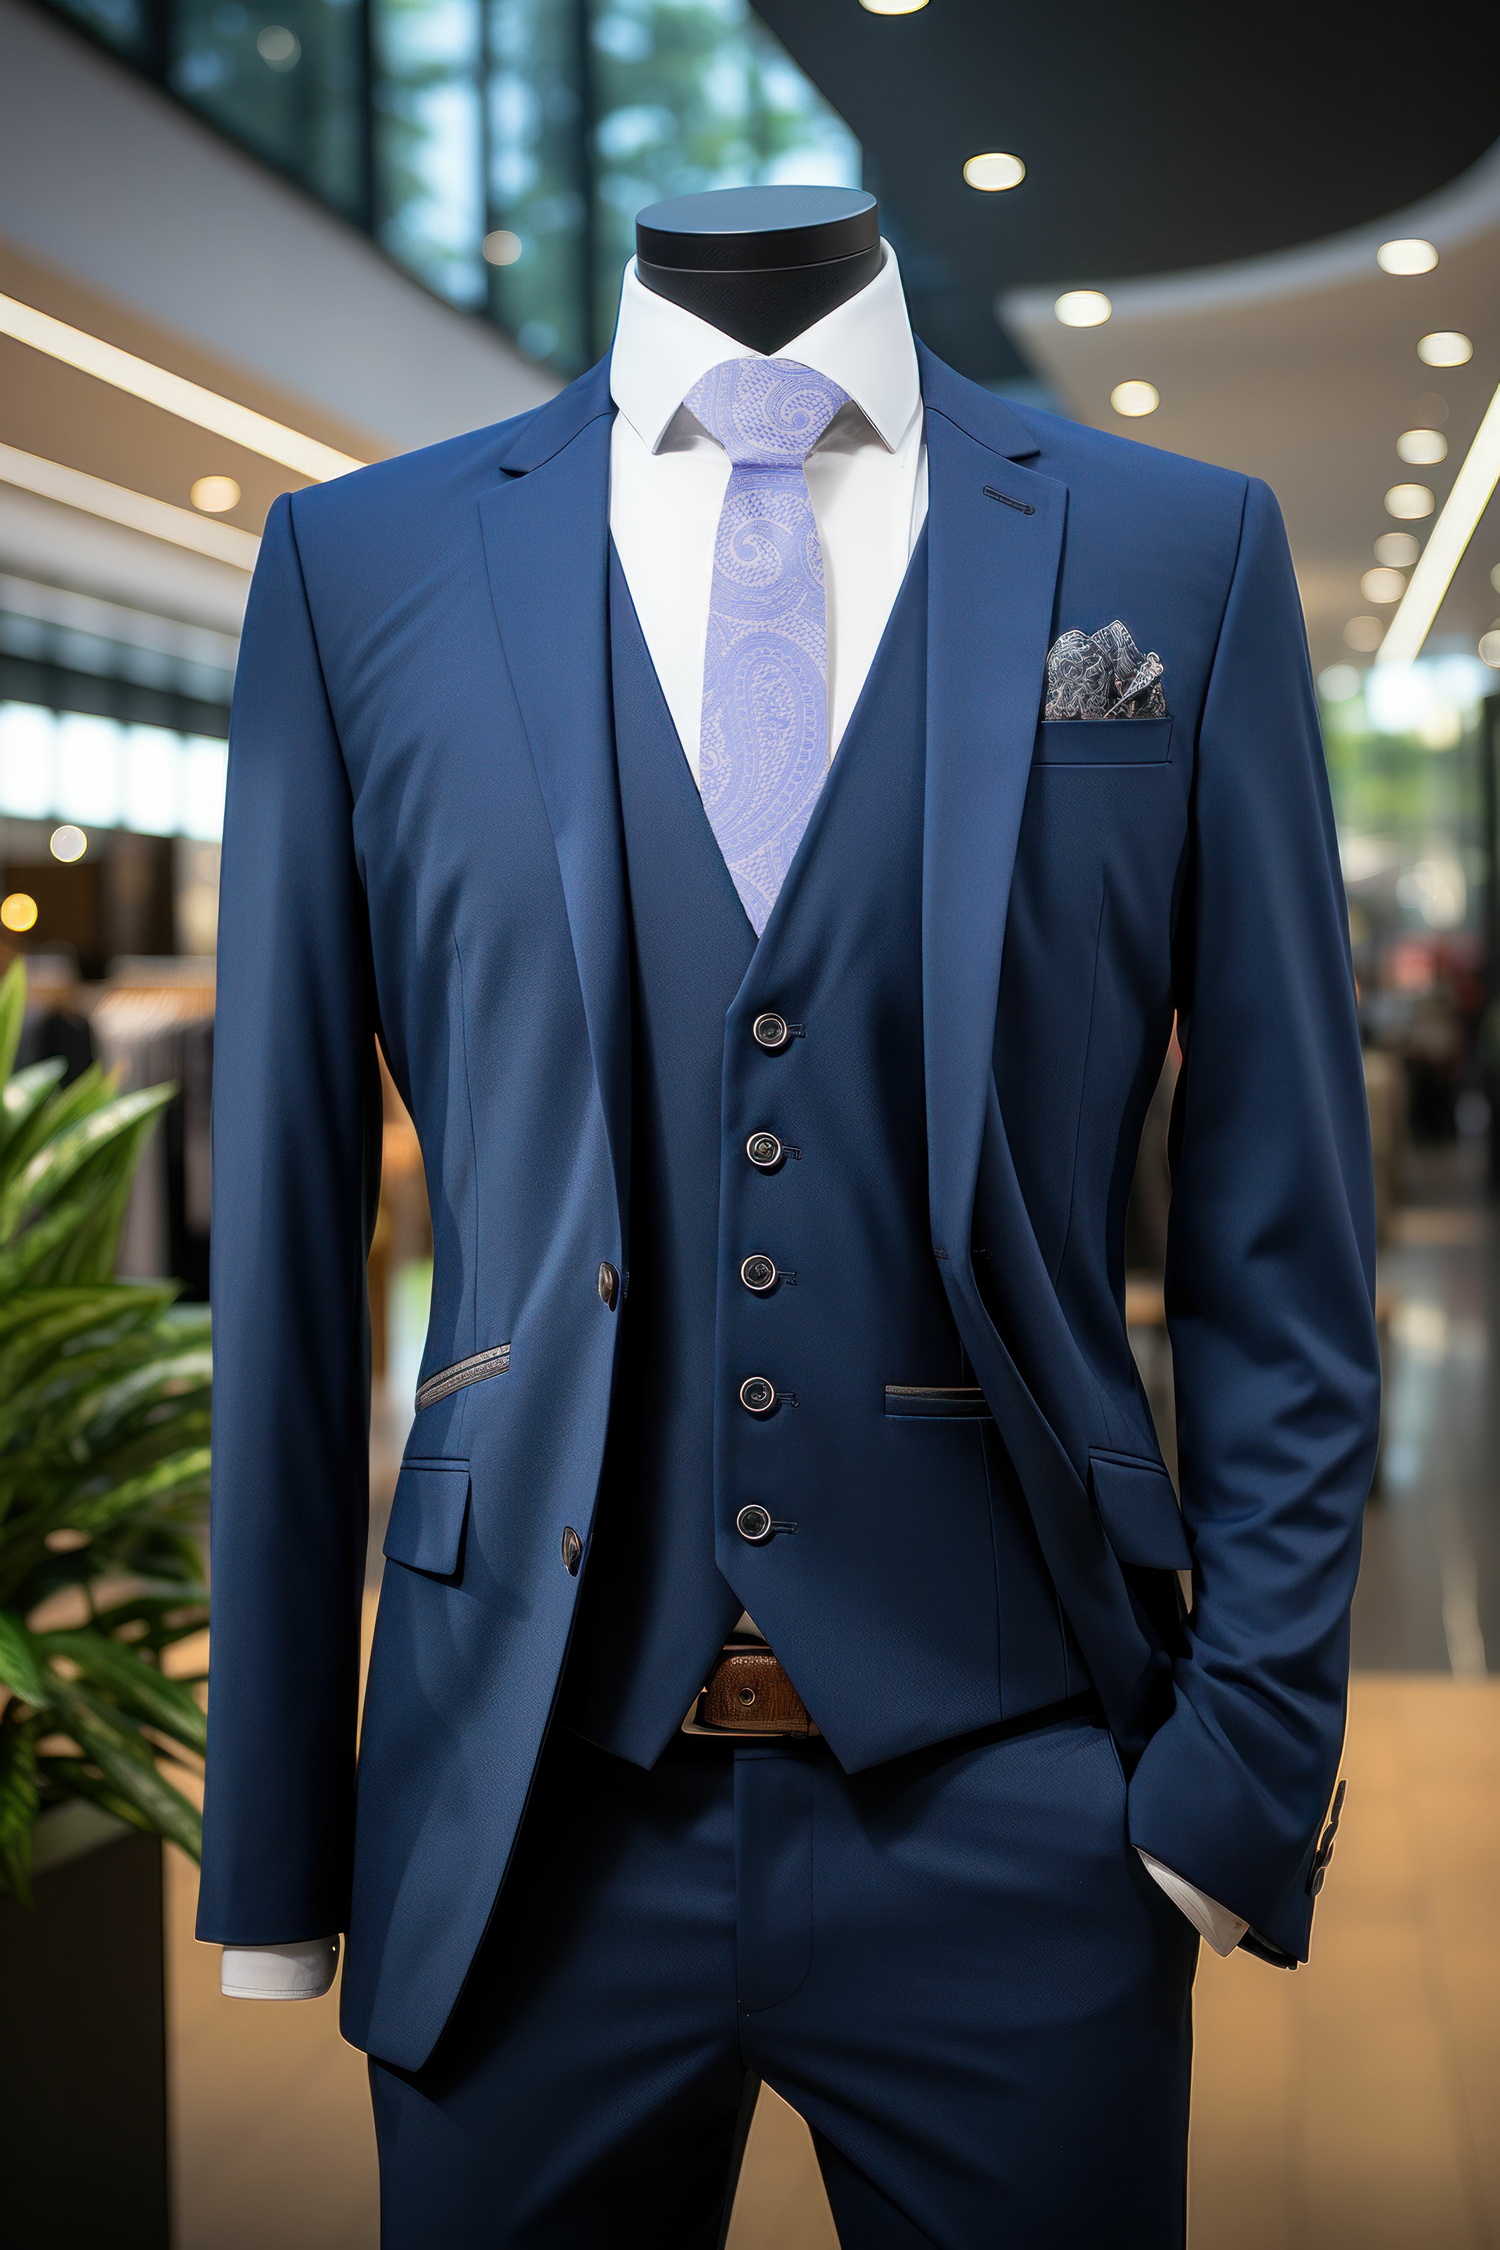 View 3 On Suit Greyish Steel Blue Paisley Necktie